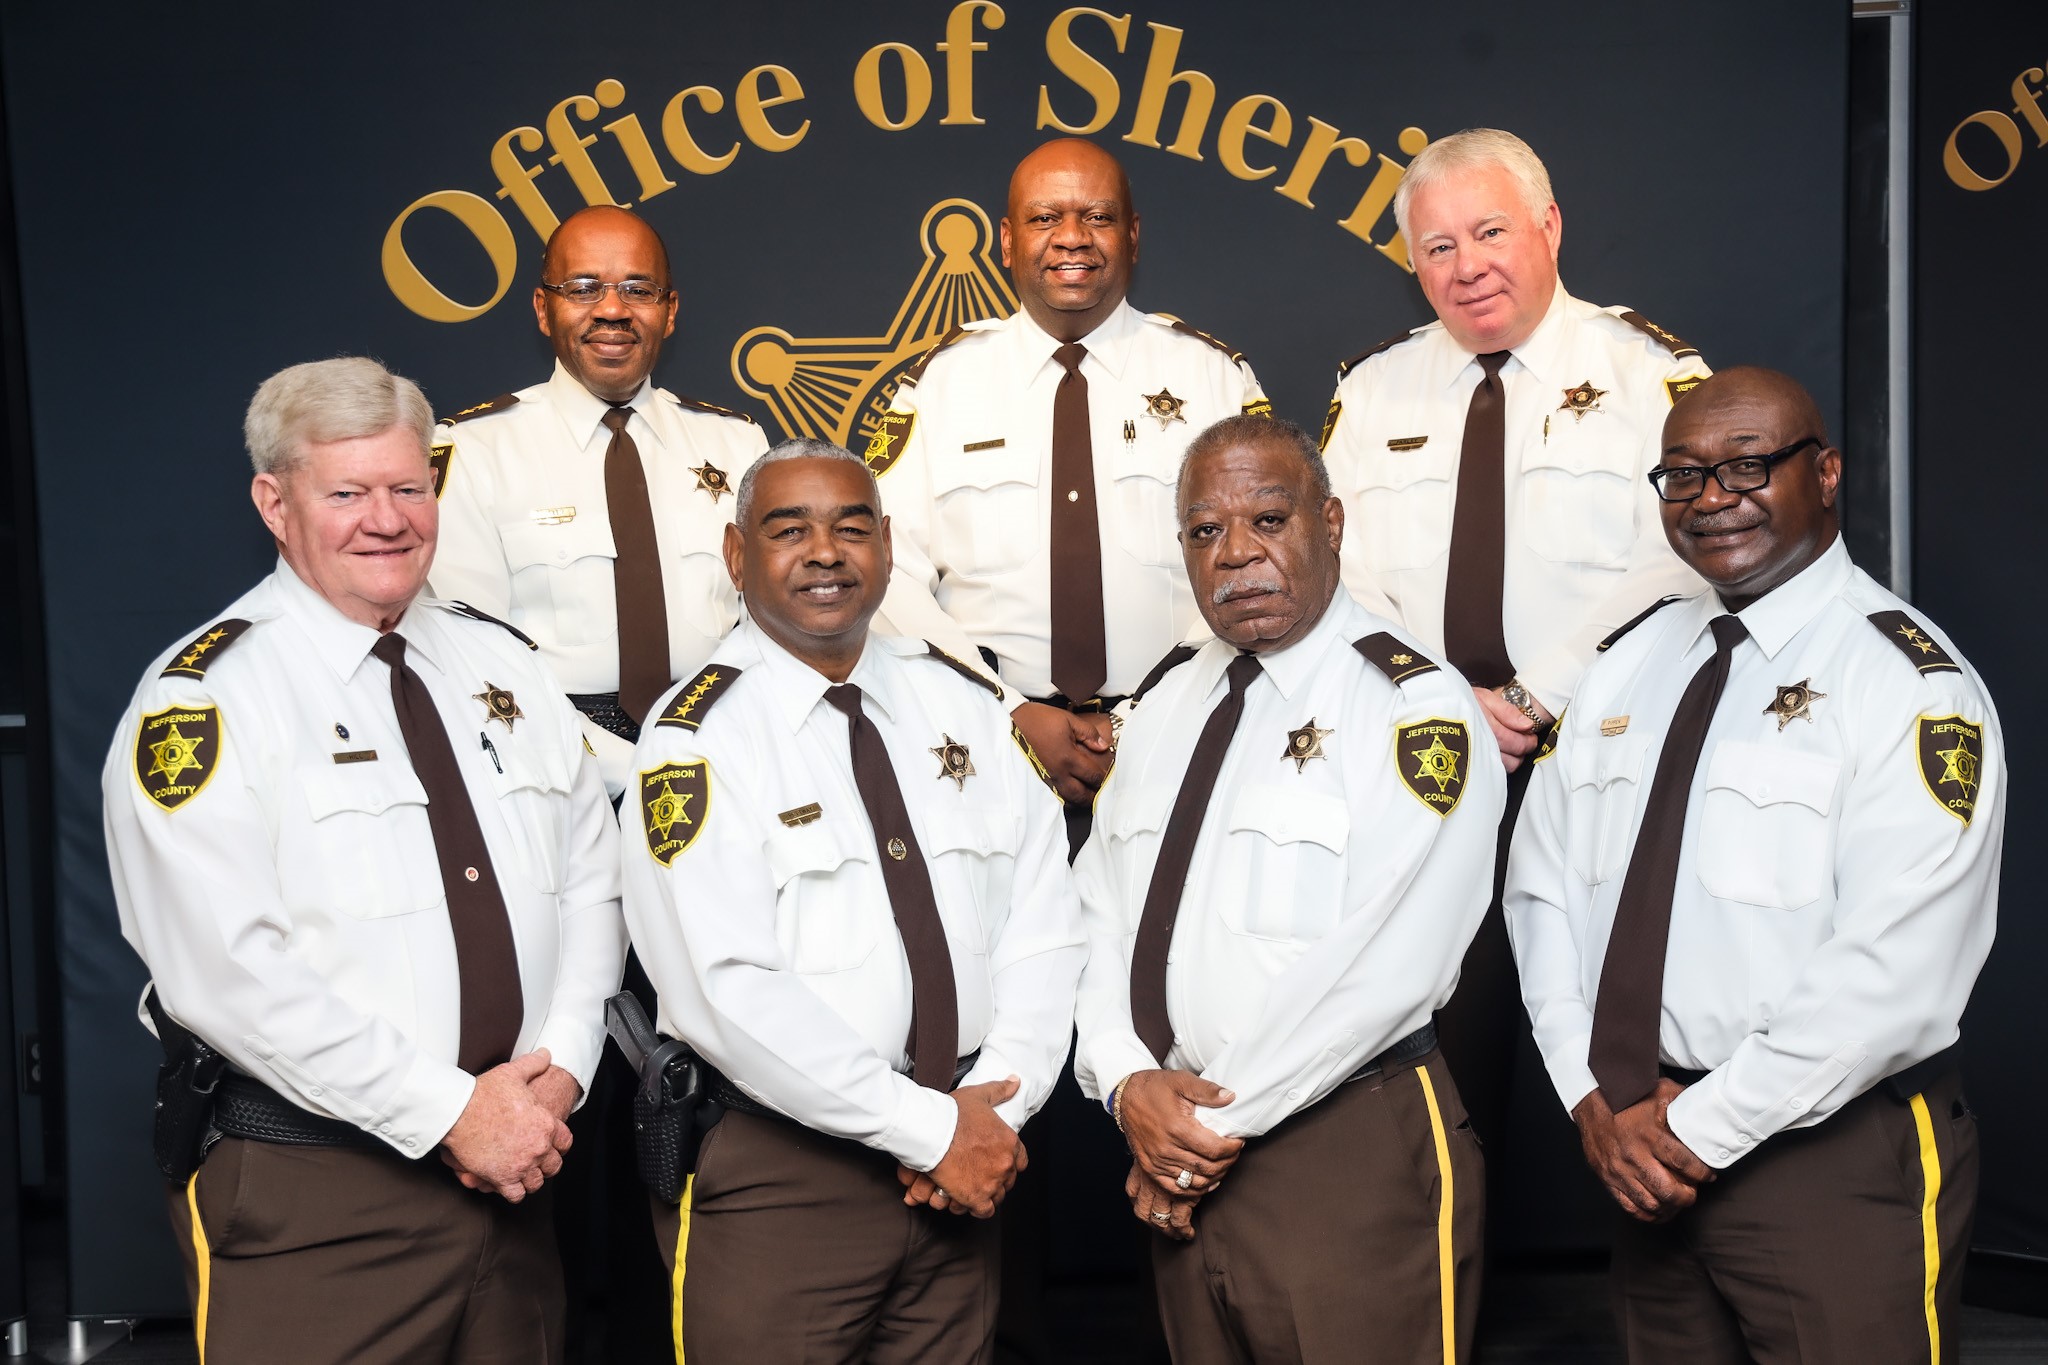 Command-Staff-Jefferson-County-Sheriff-Department